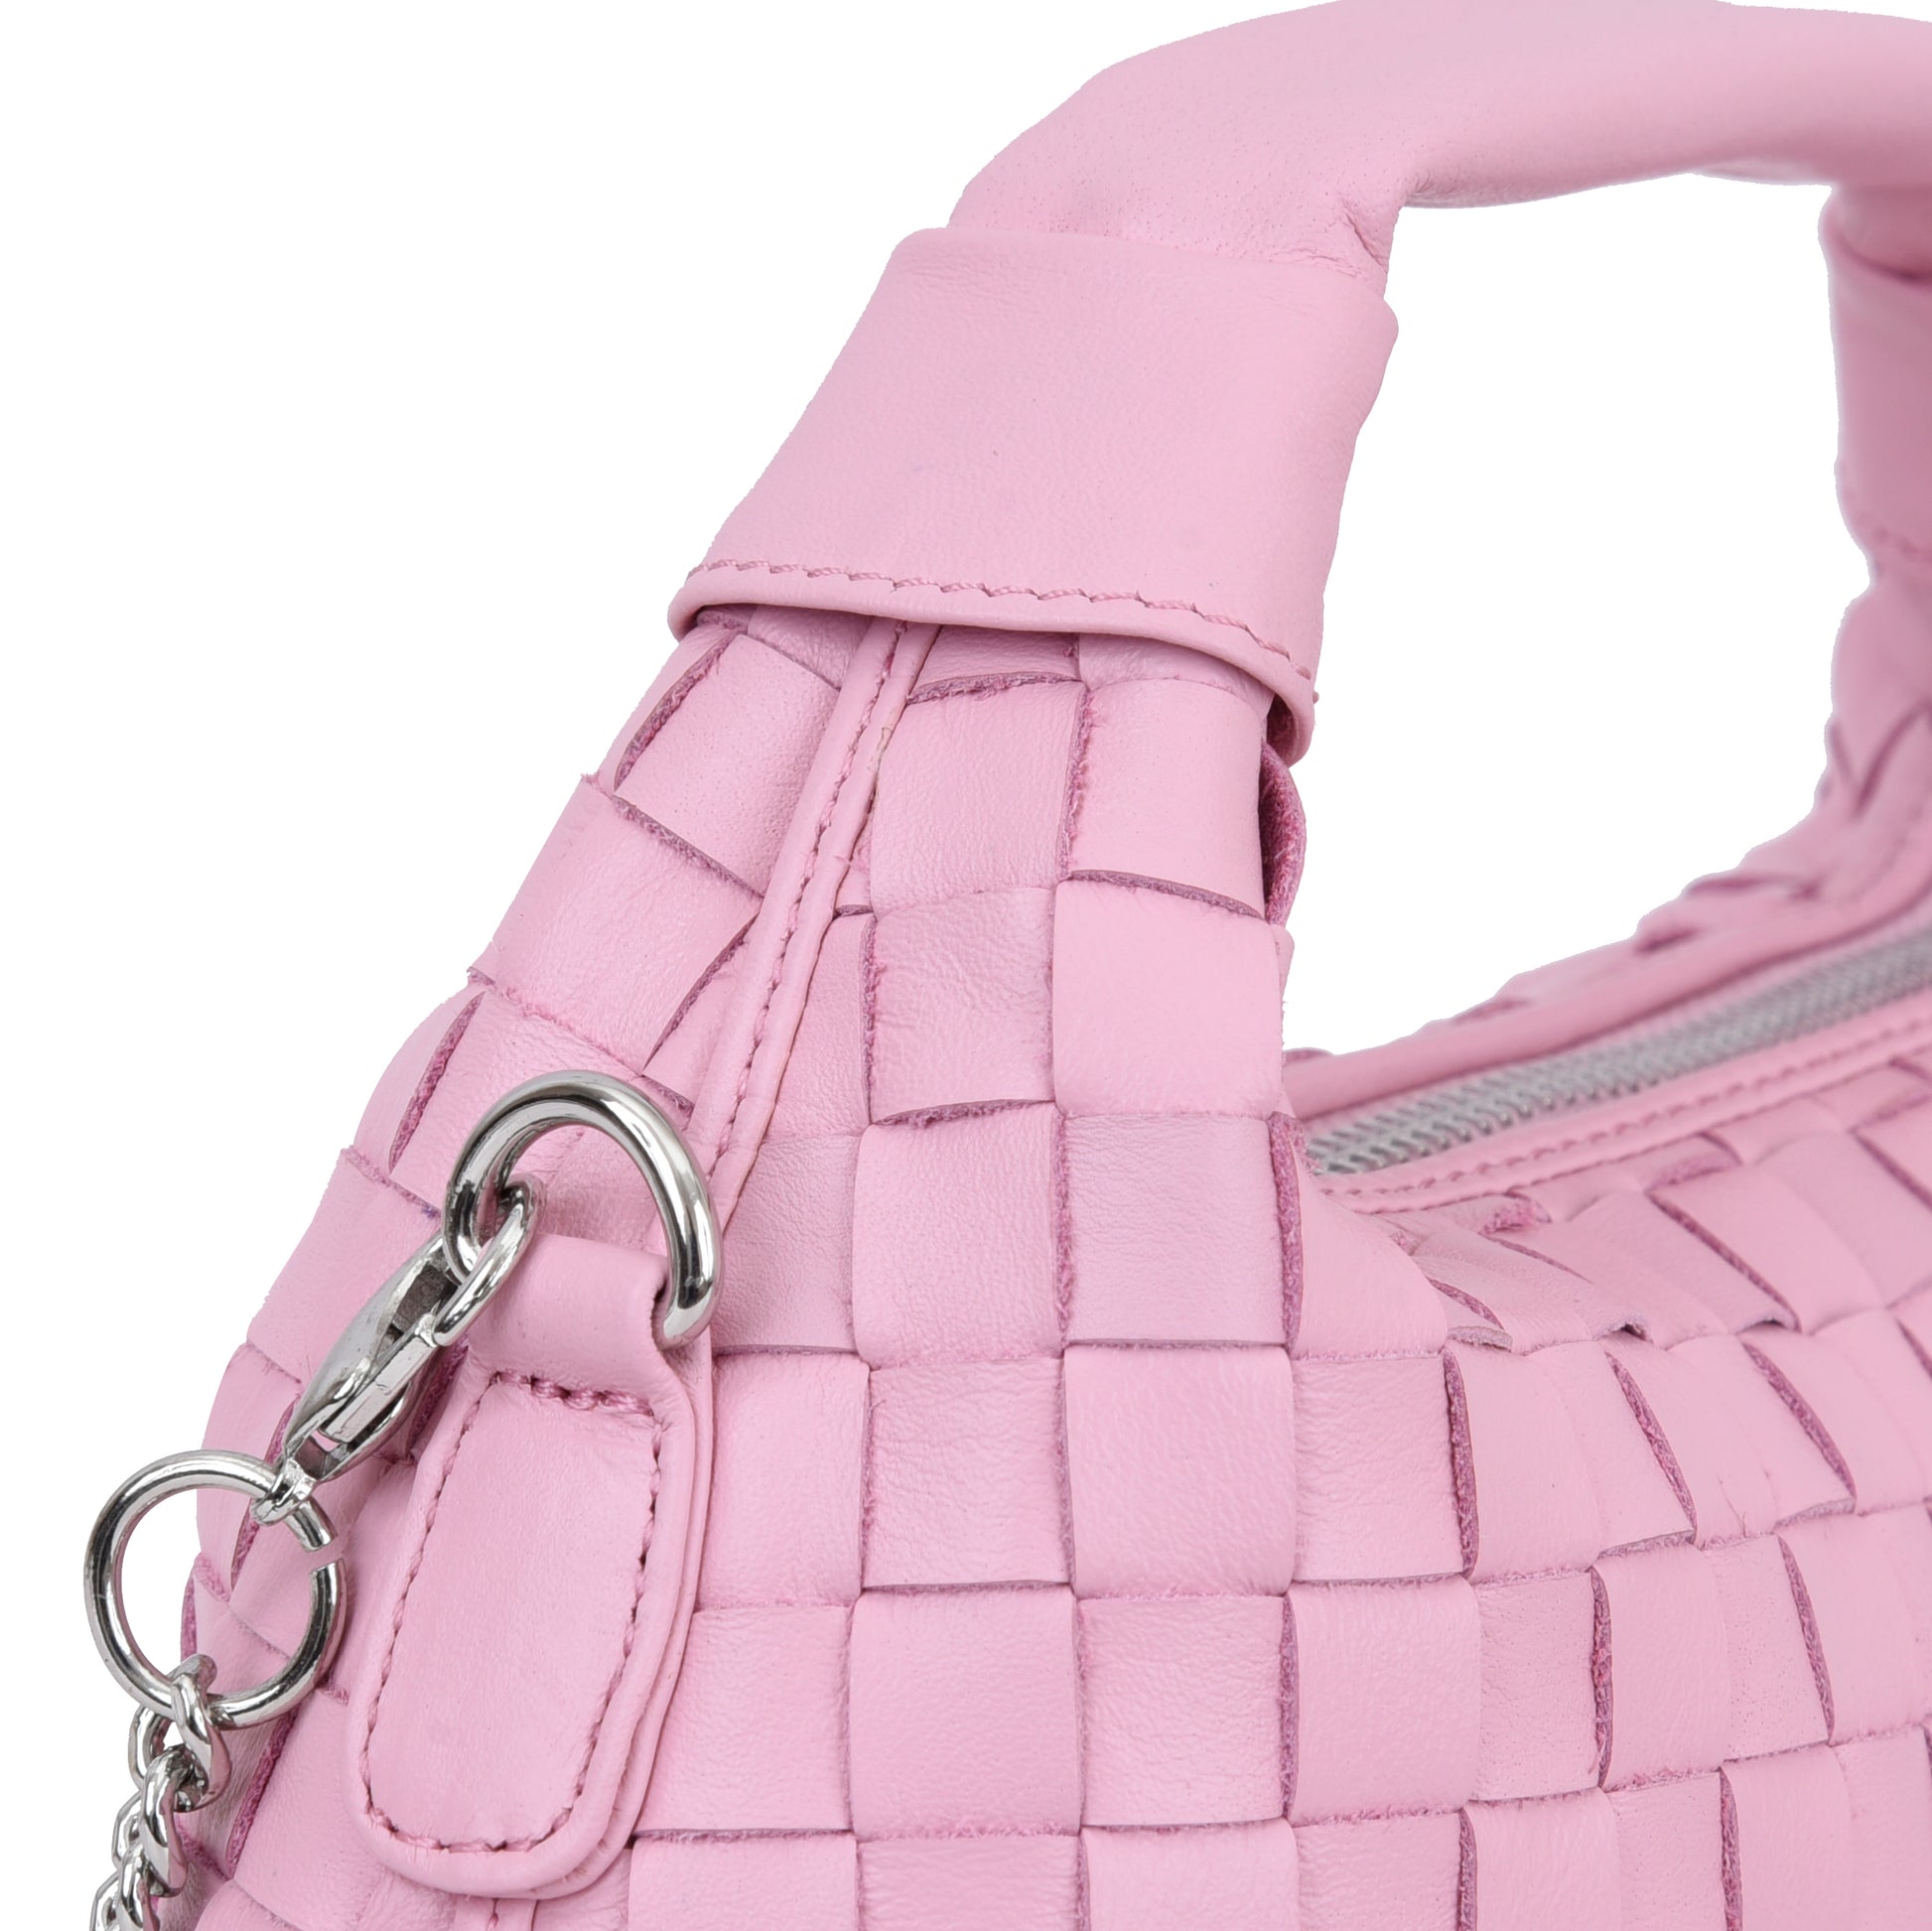 Núnoo Mini Dandy braided Silky Light Pink Evening bags Light pink